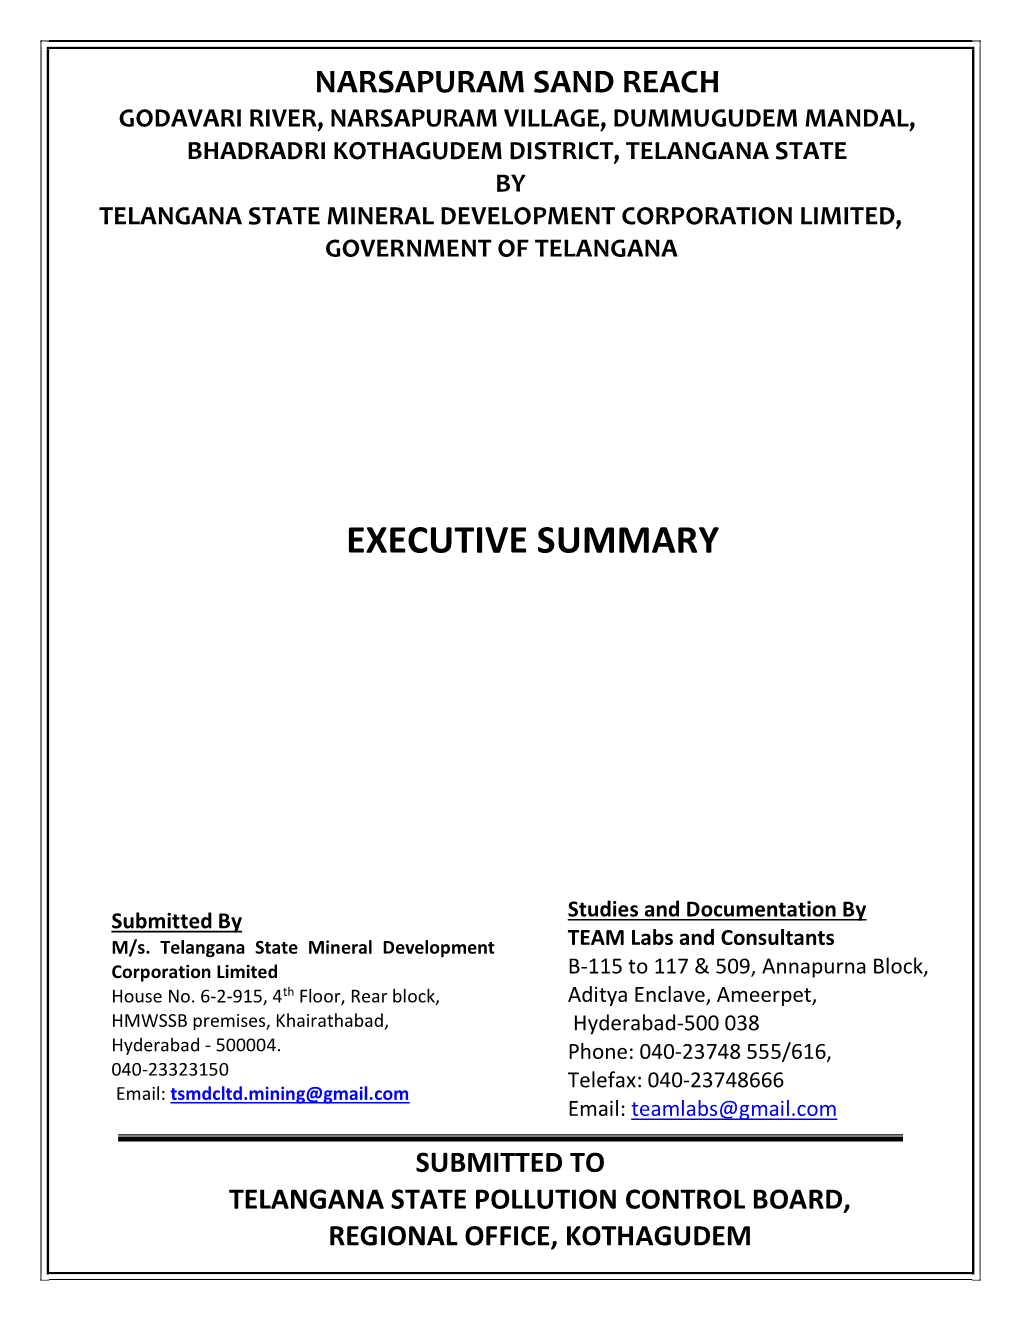 Bhadradri Kothagudem District, Telangana State by Telangana State Mineral Development Corporation Limited, Government of Telangana